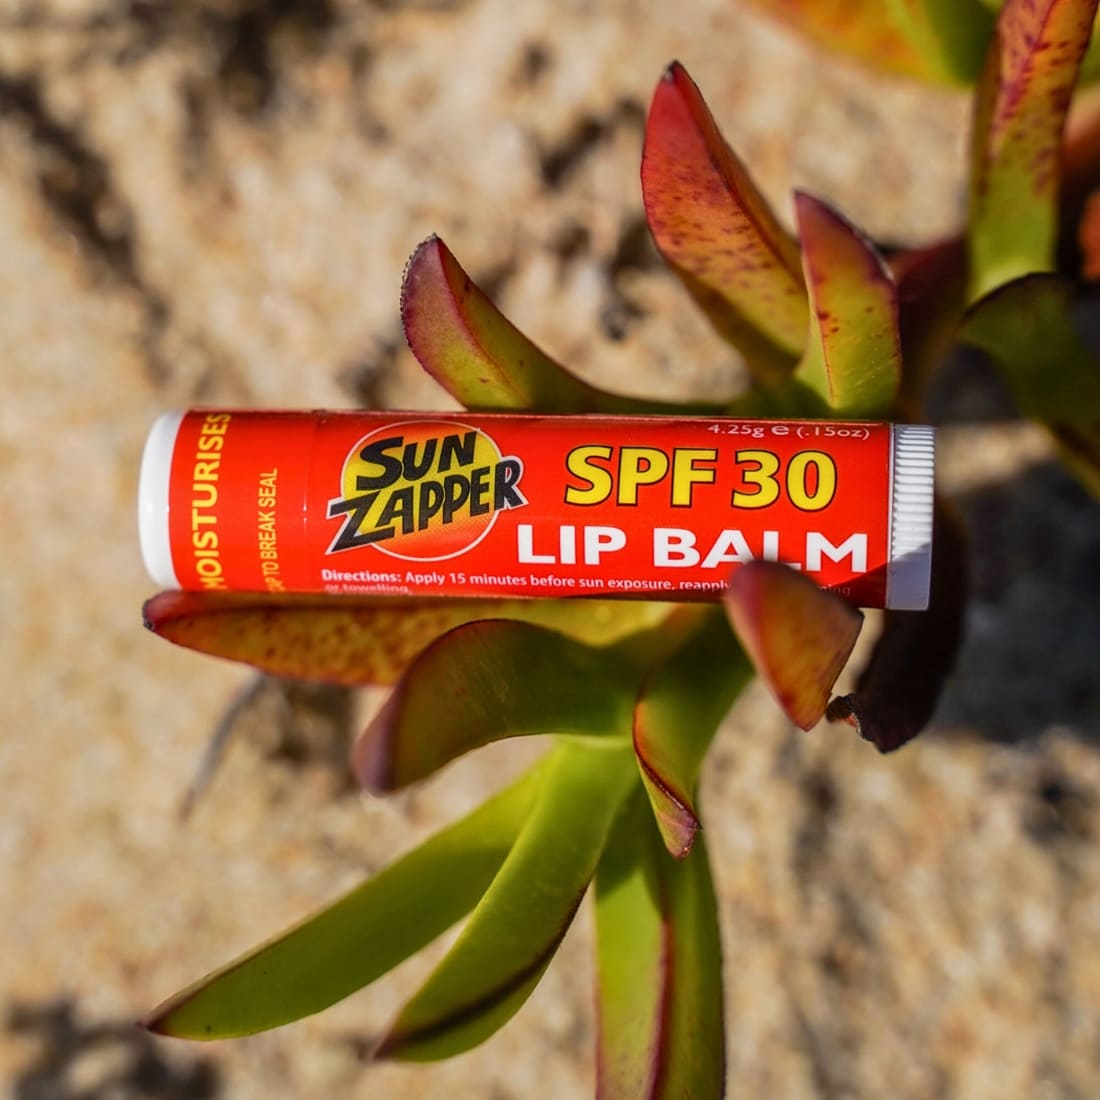 Sun Zapper Spf30+ Lip Balm With Aloe Vera - Clear - Sunscreen by Sun Zapper 4.25g